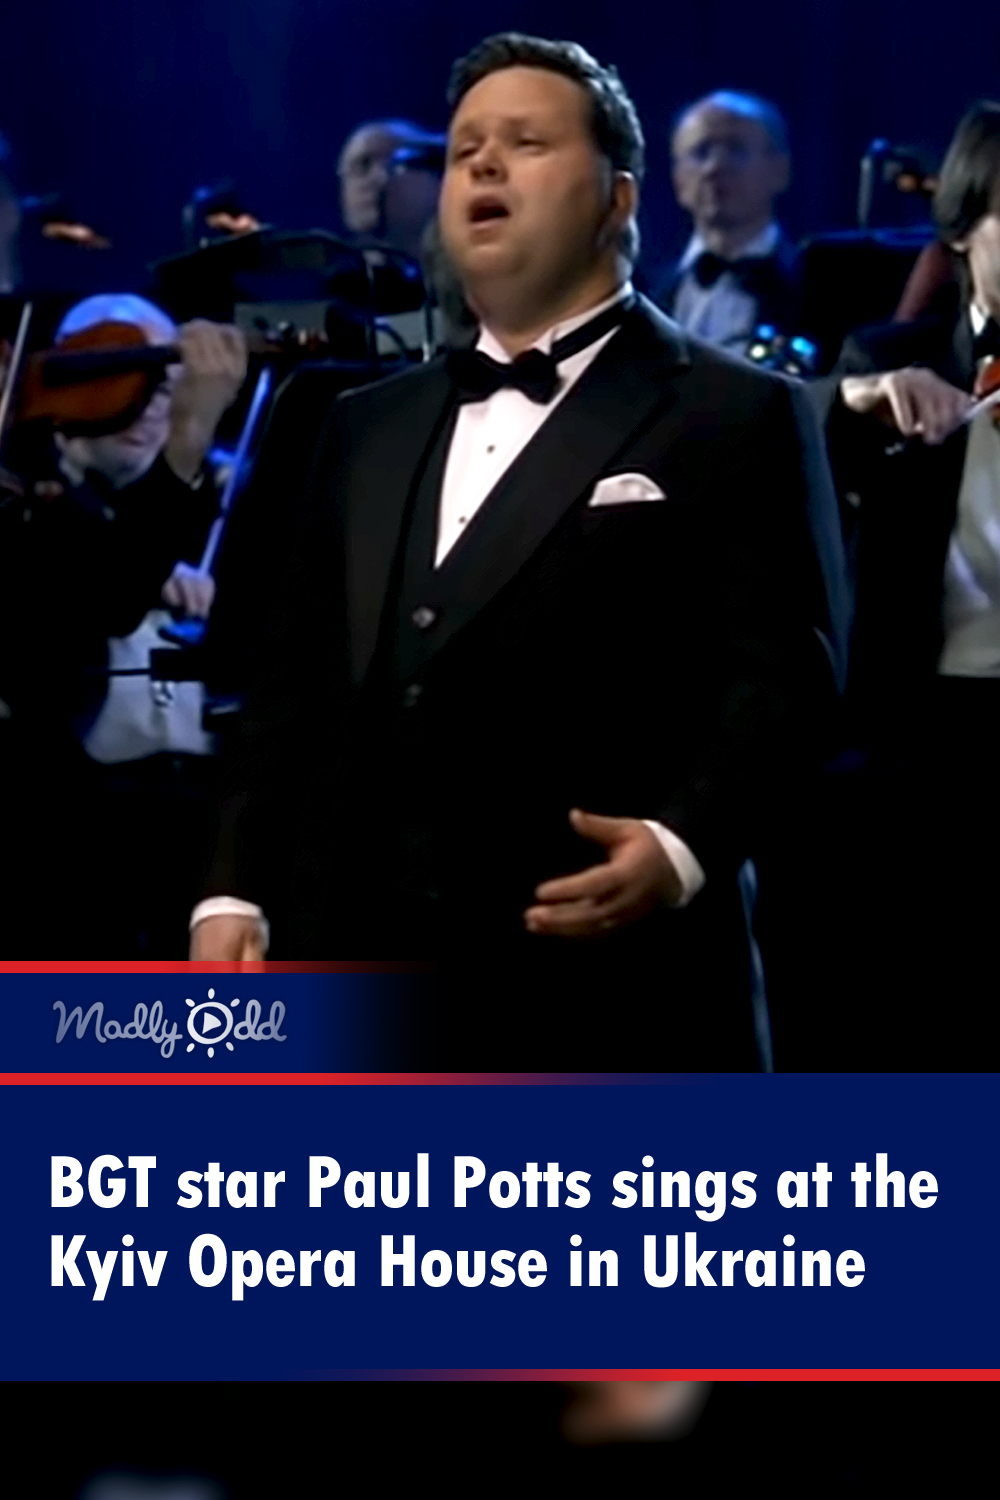 BGT star Paul Potts sings at the Kyiv Opera House in Ukraine